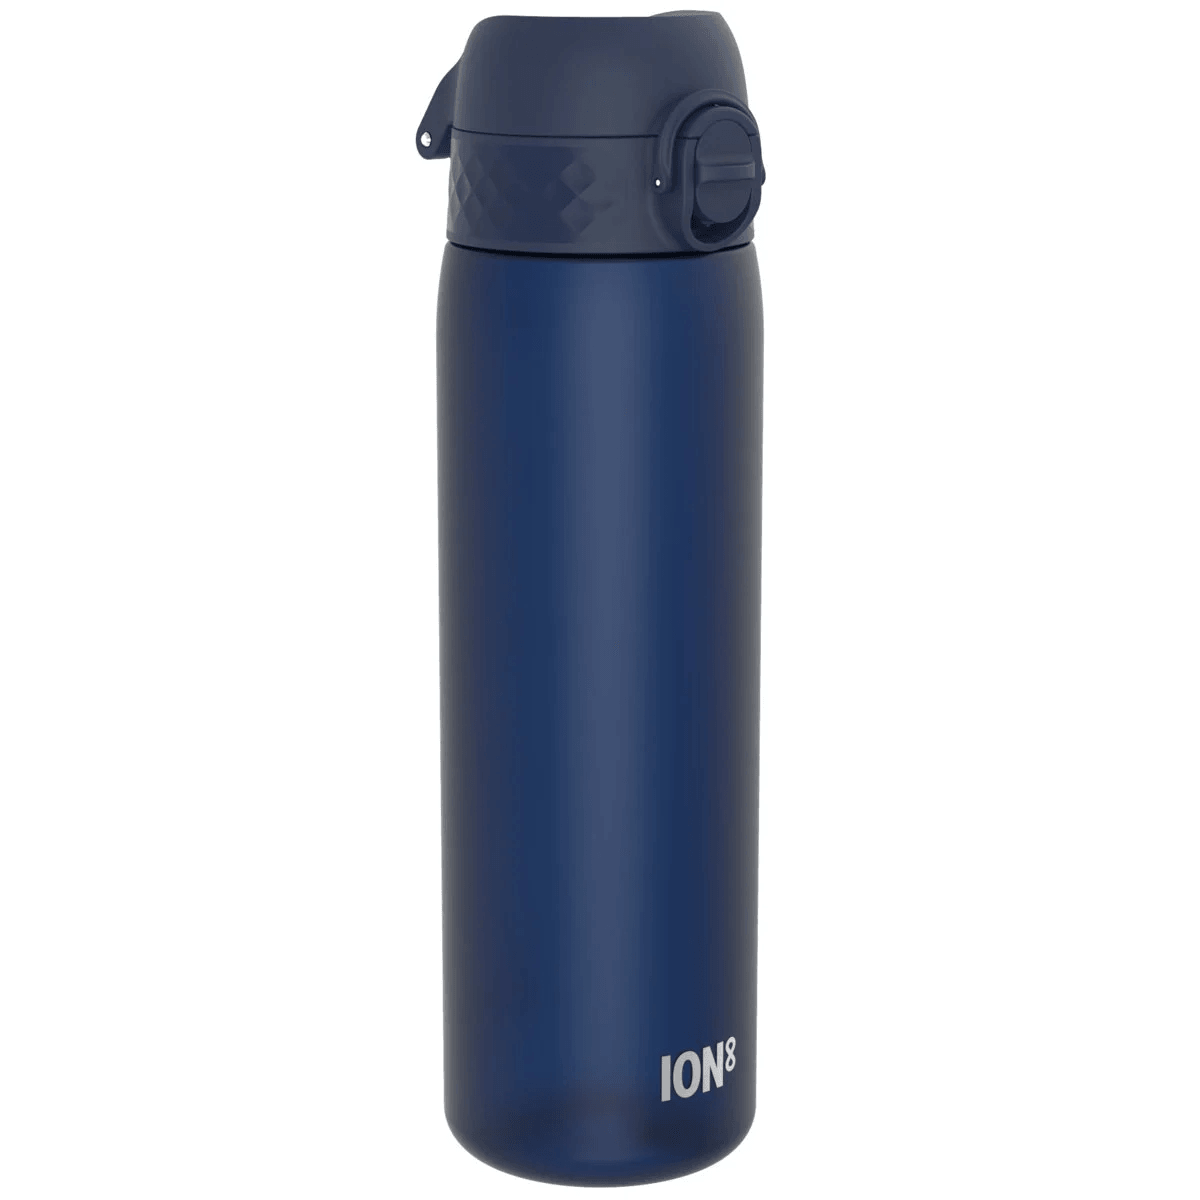 Ion8: butelka One Touch Water Bottle 500 ml - Noski Noski